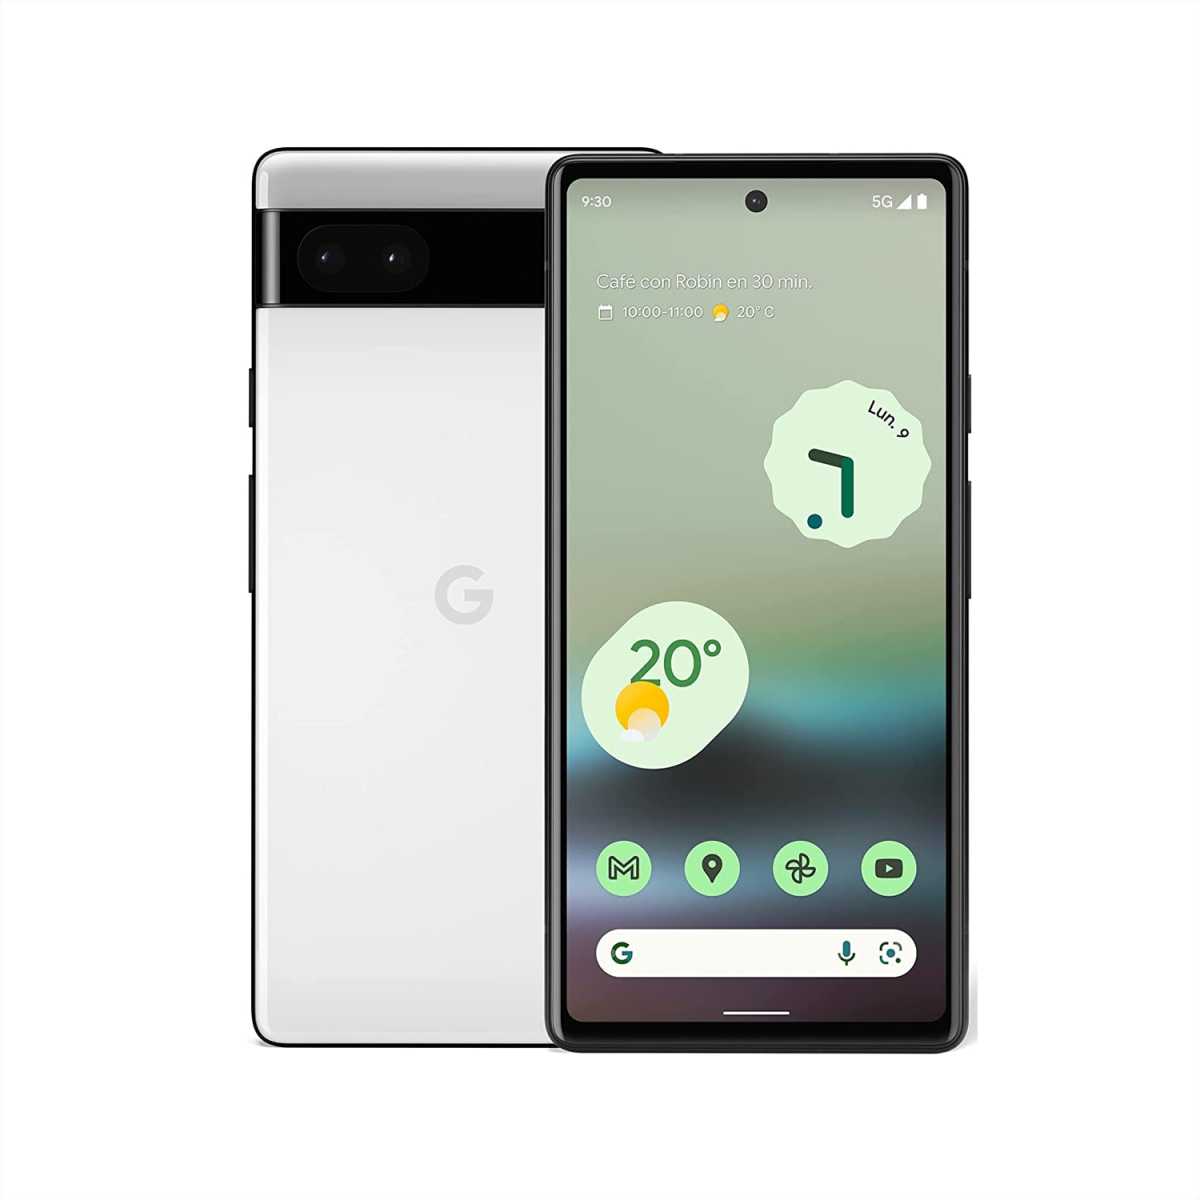  Google Pixel 6a